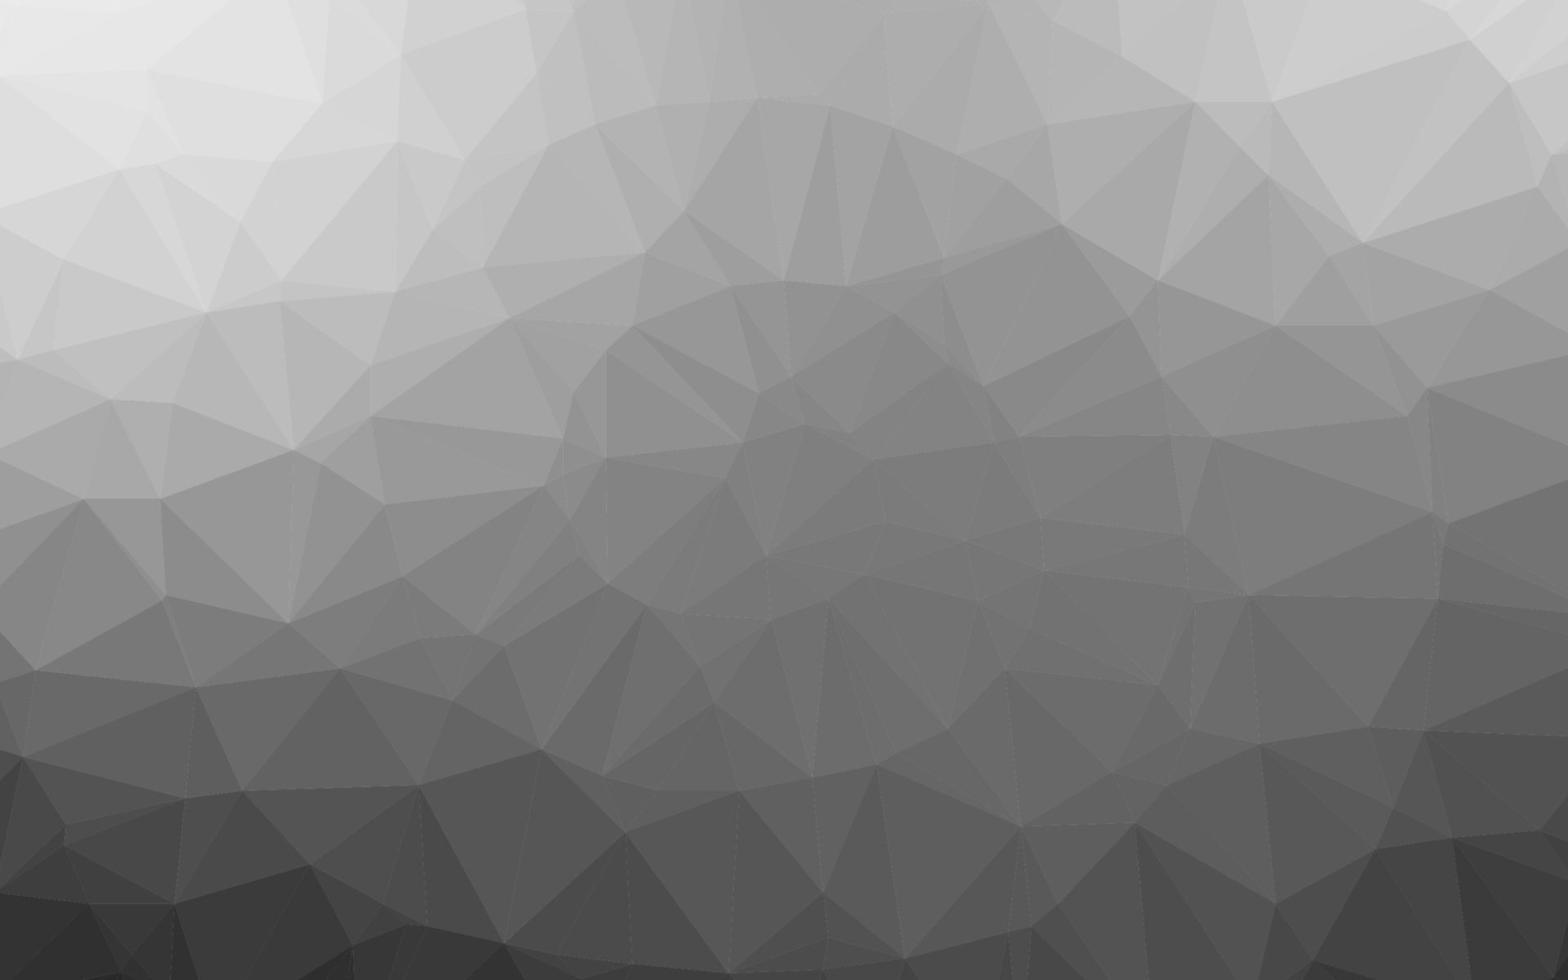 Fondo de mosaico abstracto de vector gris plateado claro.